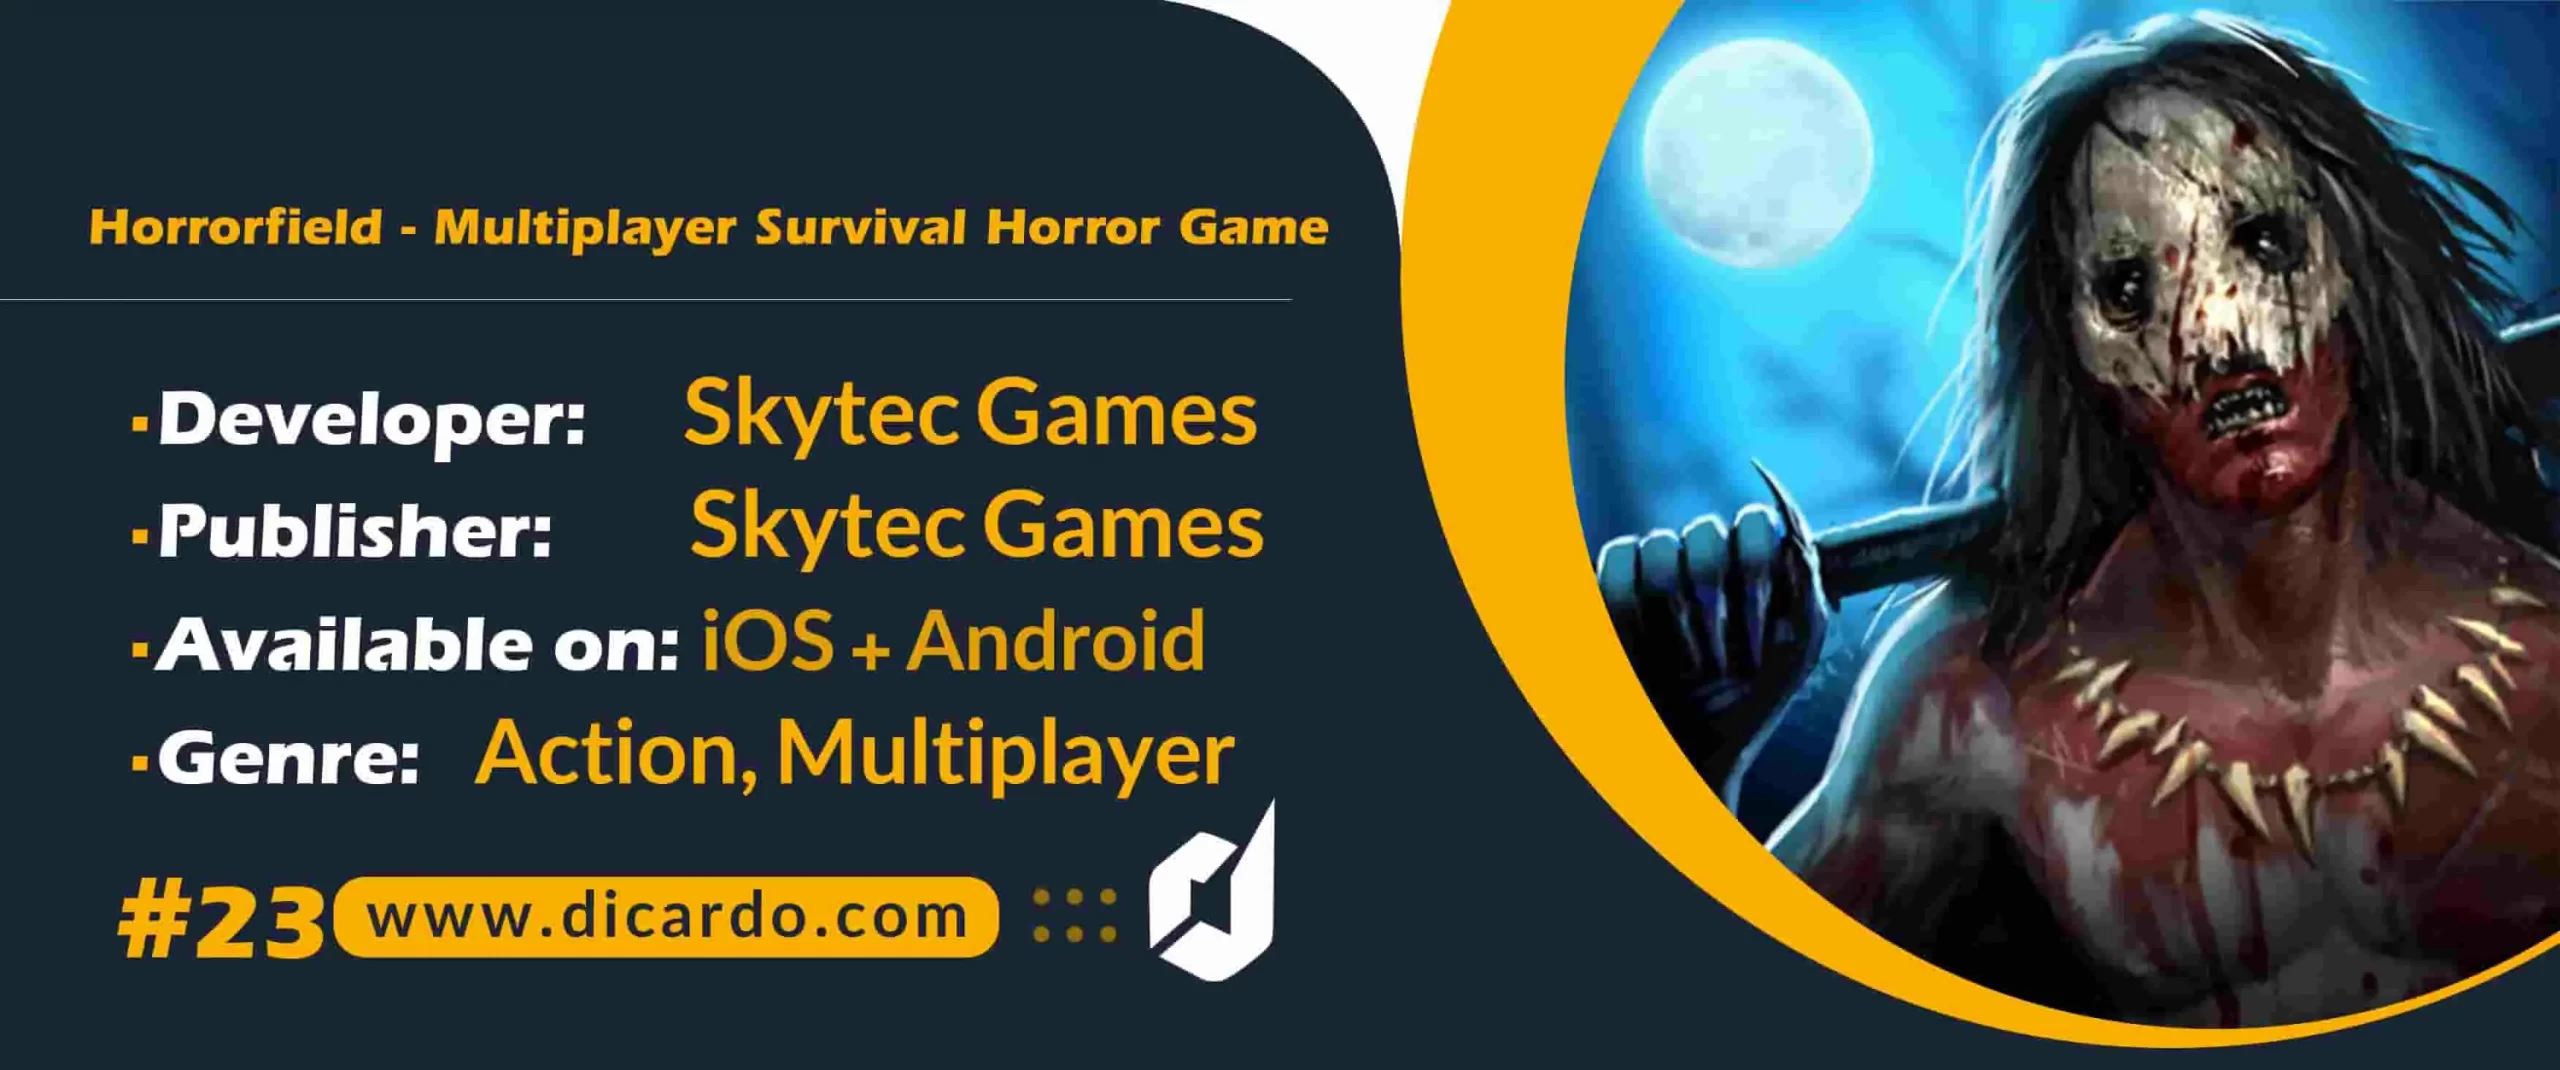  هوروفیلد مولتی پلیر سورویوال هارور گیم Horrorfield – Multiplayer Survival Horror Game